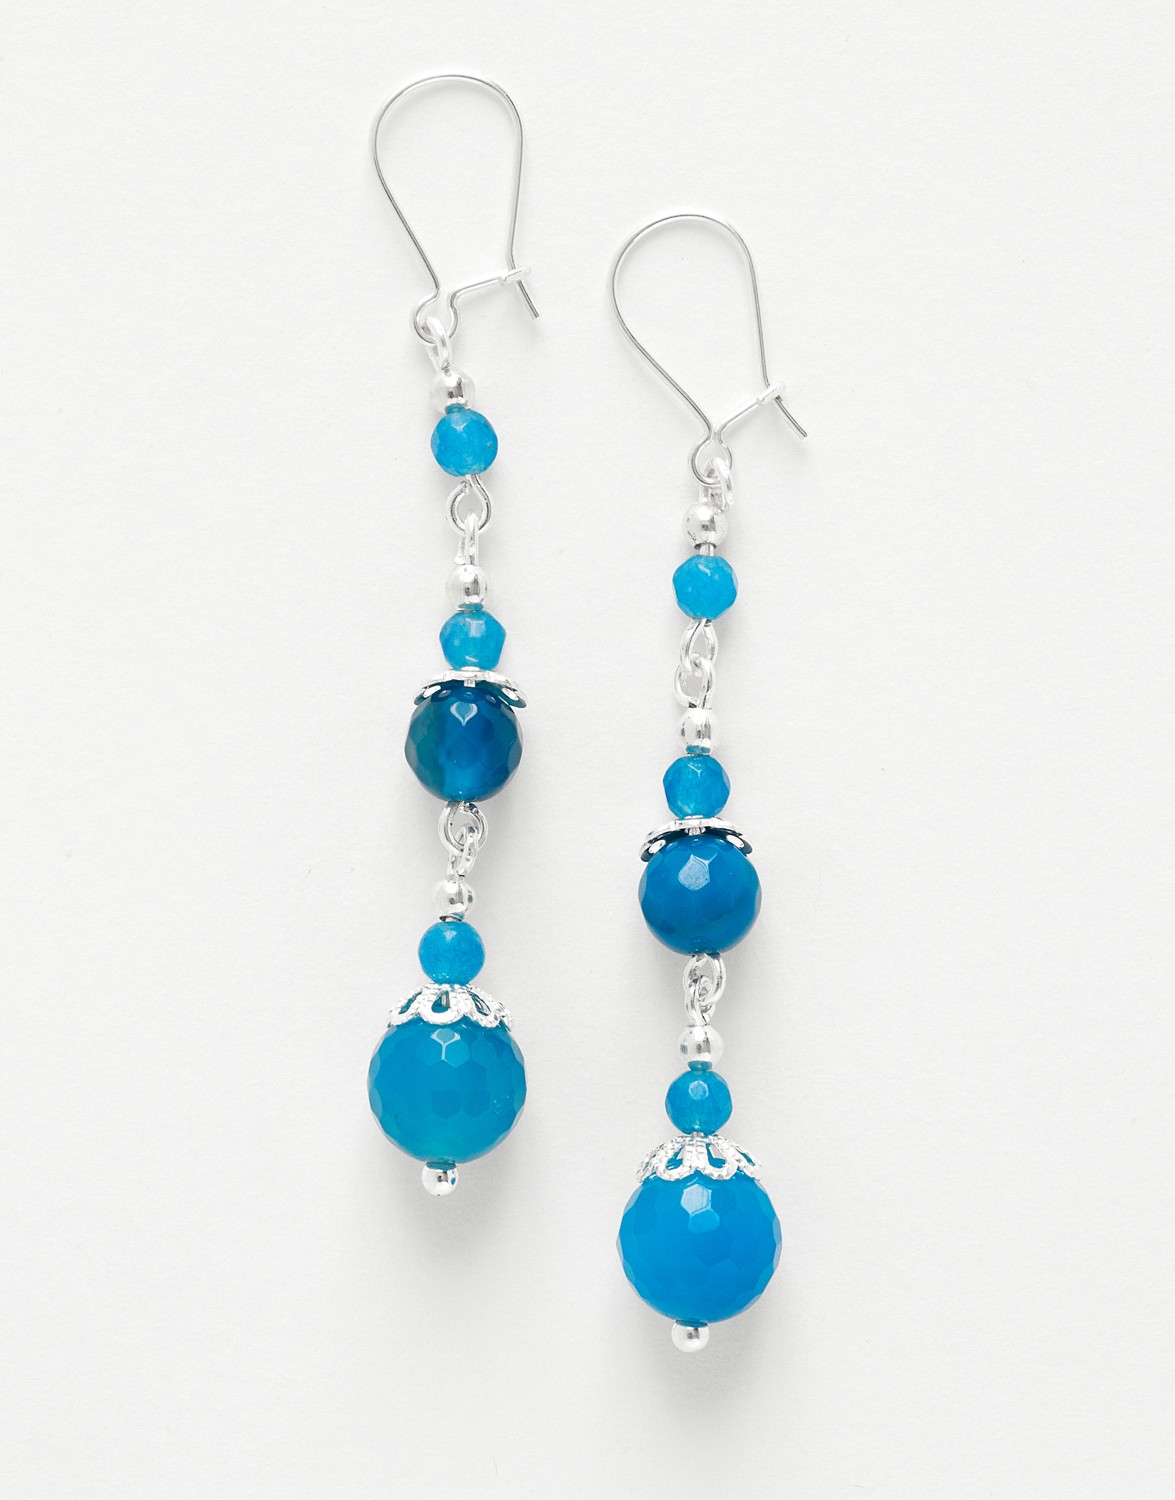 Earrings Thalia blue Agate